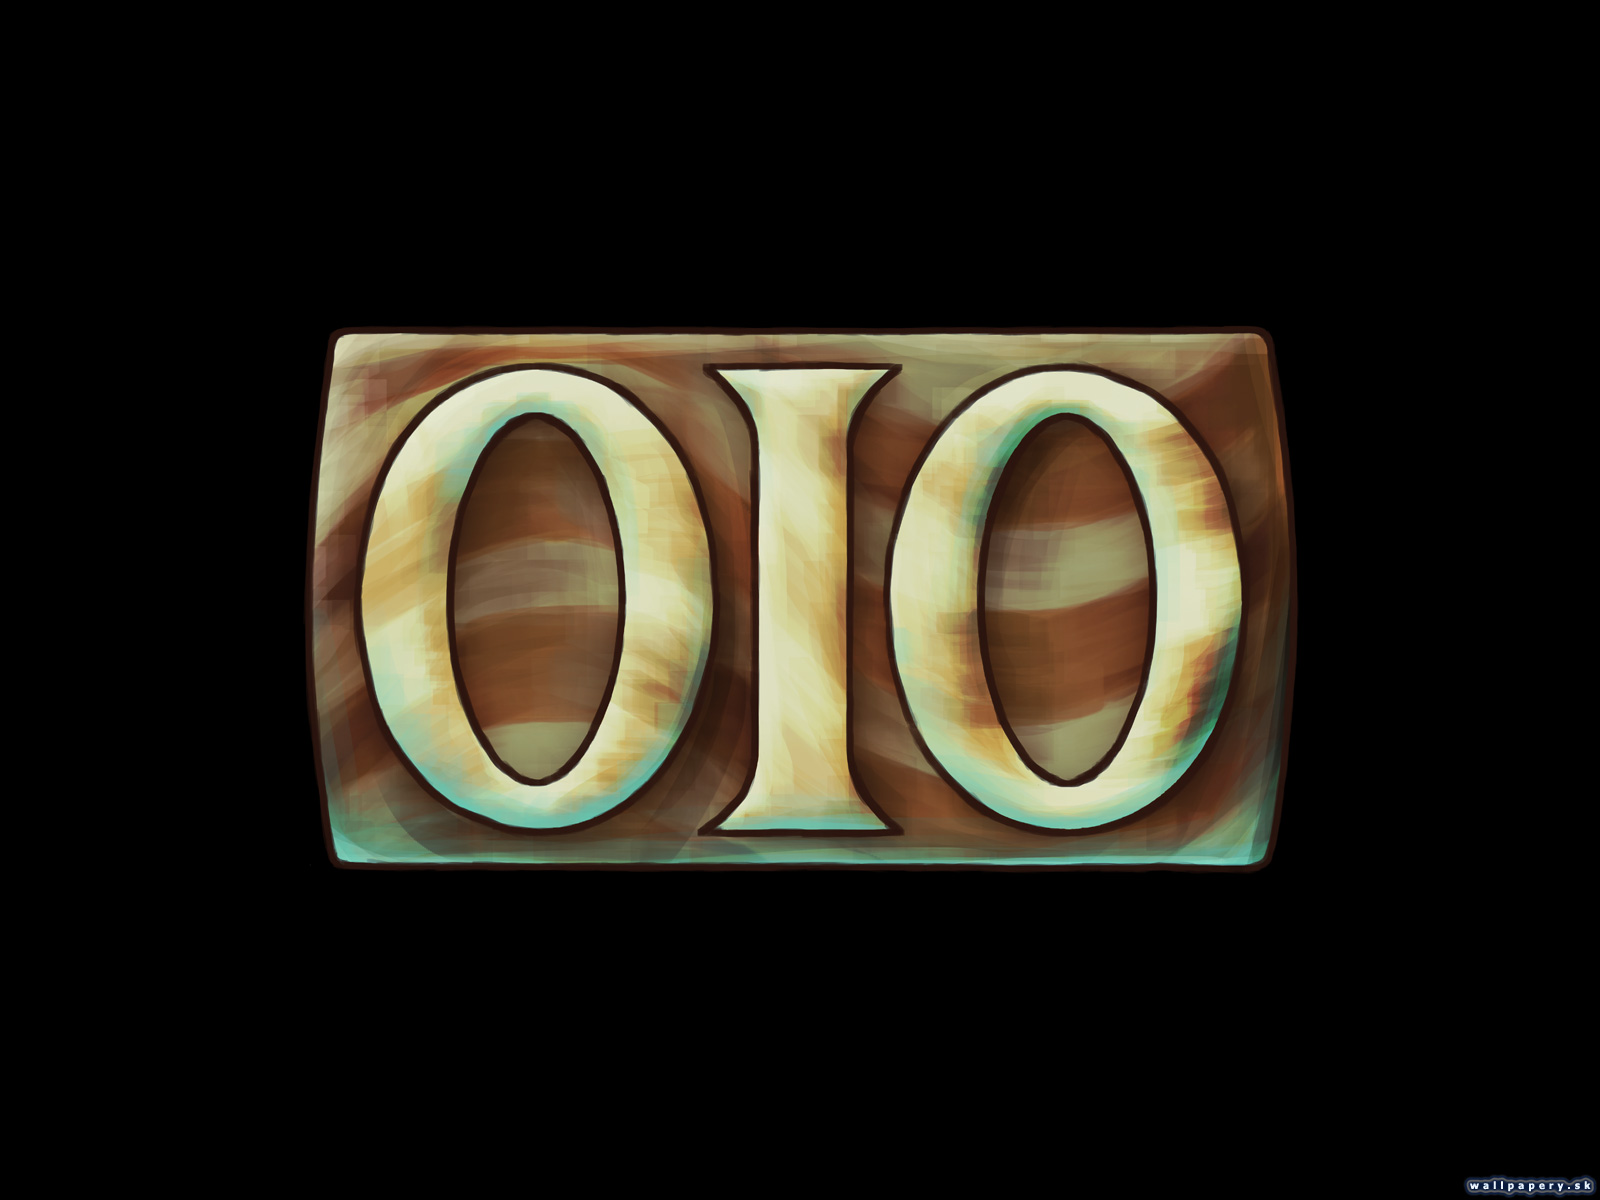 OIO: The Game - wallpaper 1